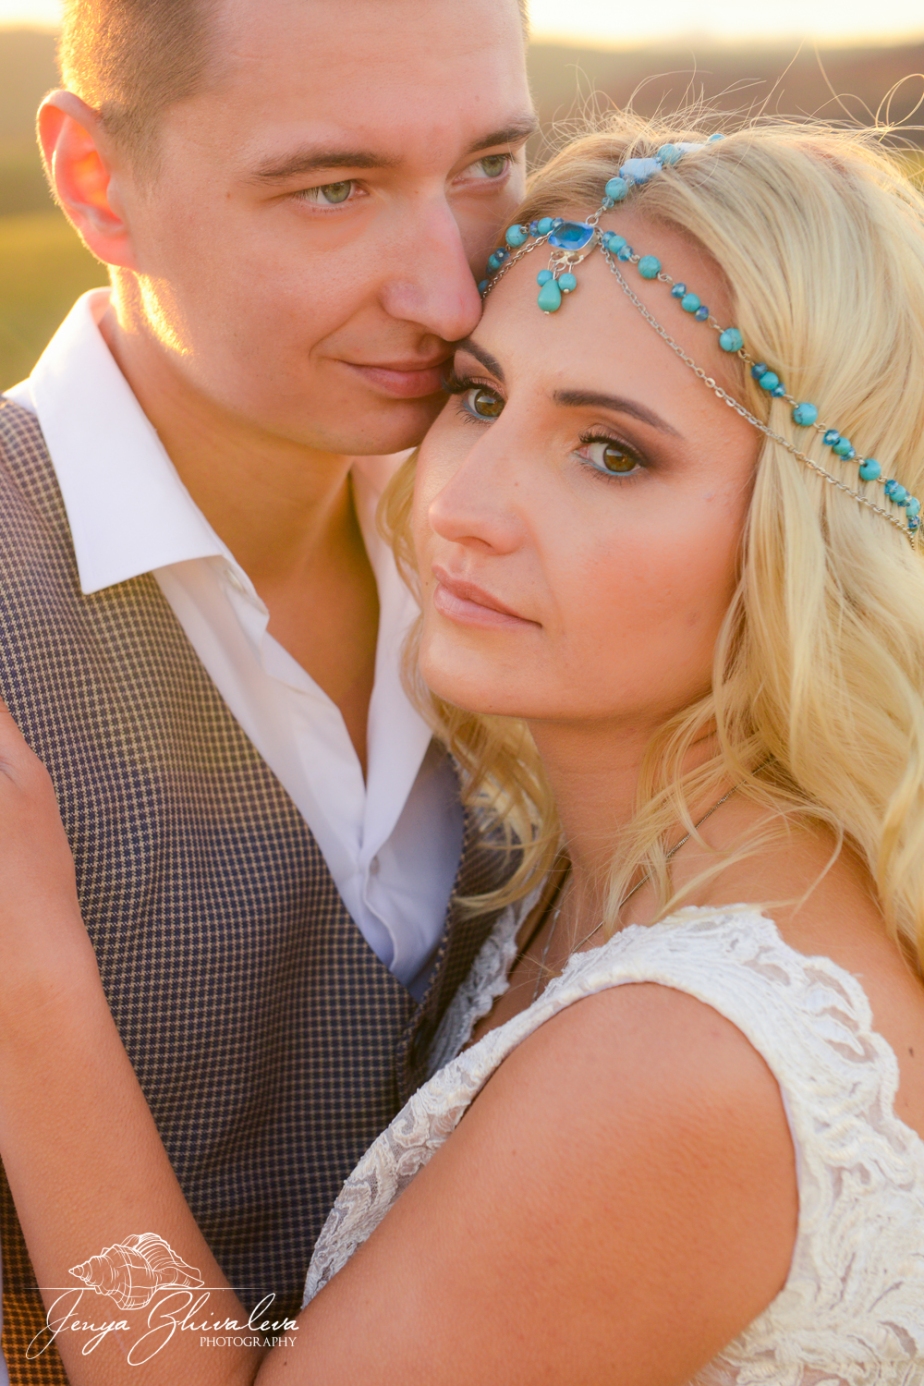 Ksenia and Maksim – Wedding Photoshoot at Botlierskop Game Reserve